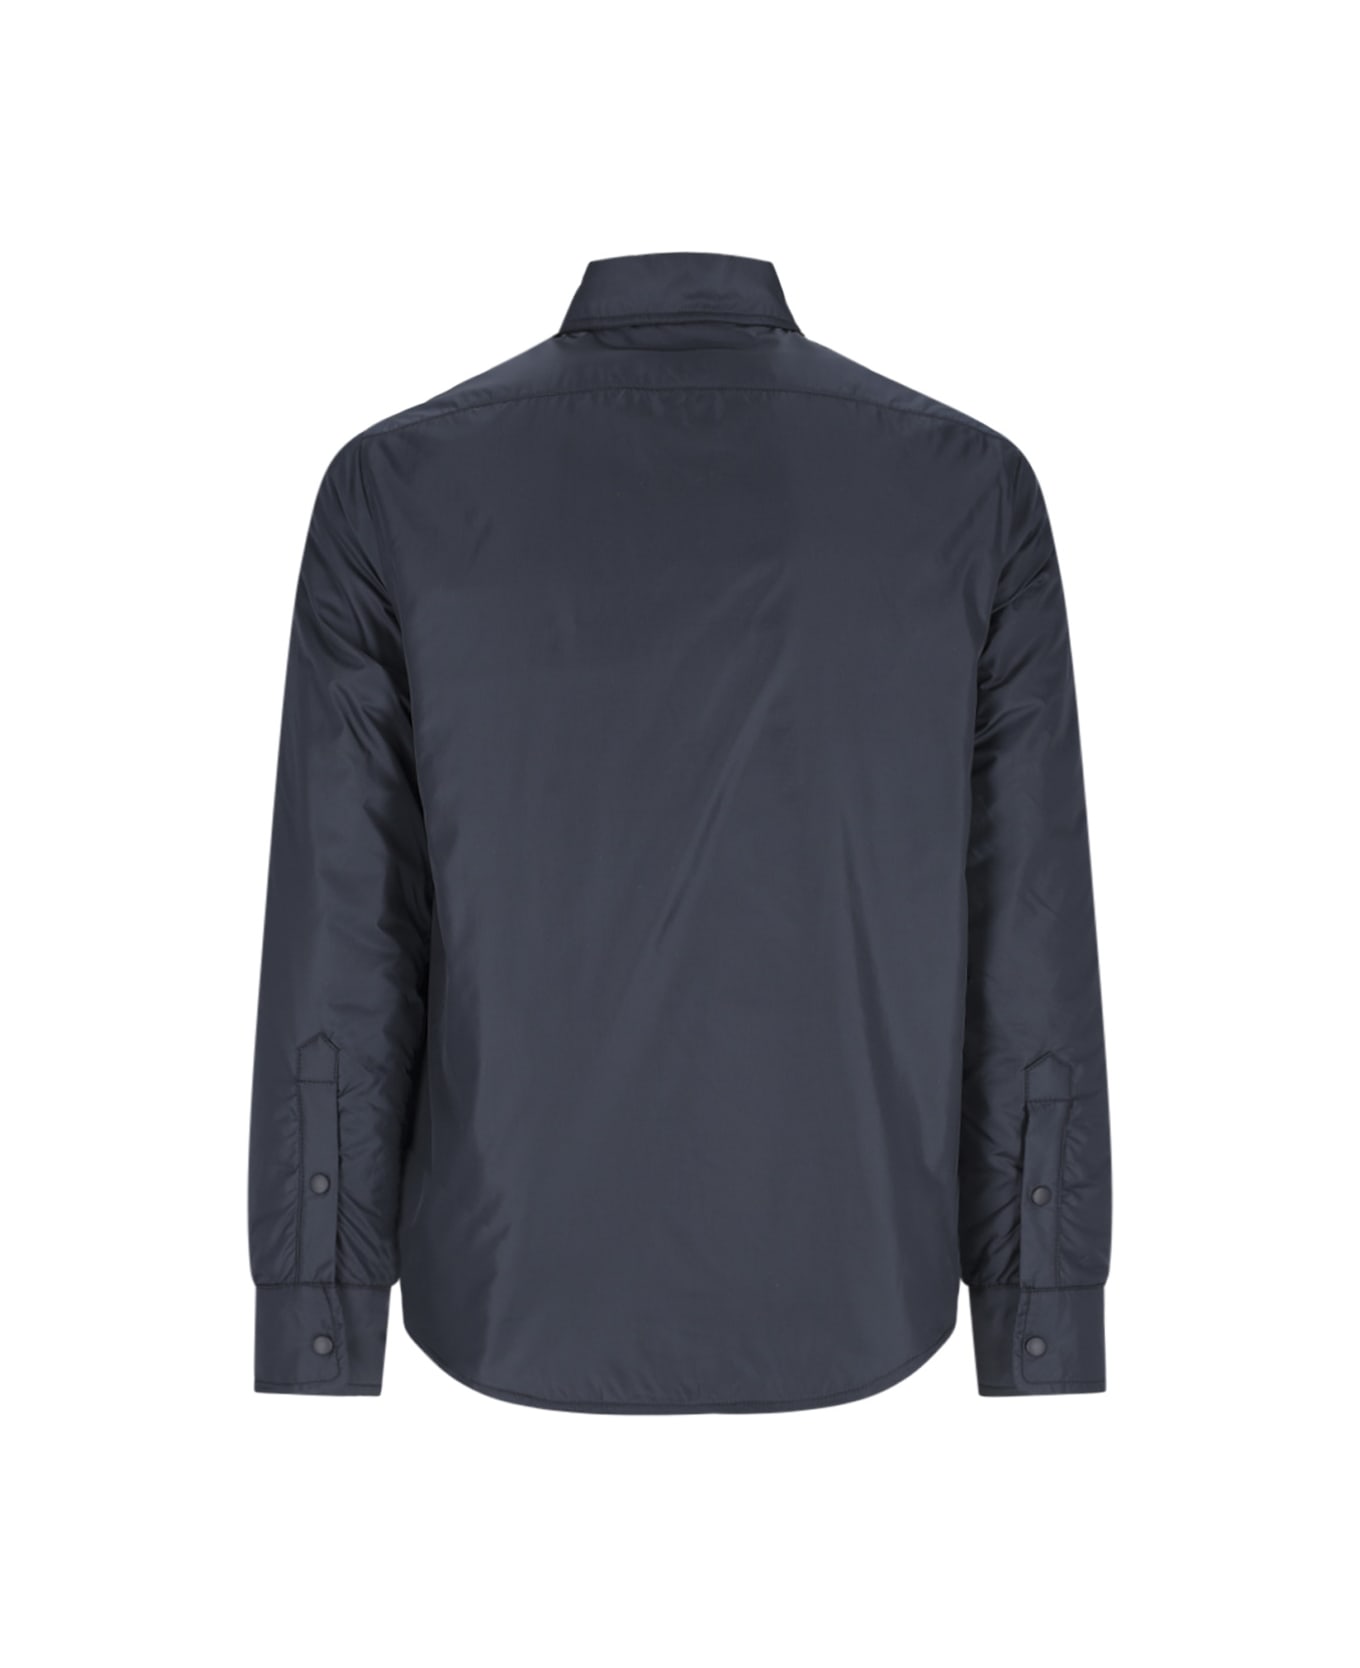 Aspesi 'glue' Shirt Jacket - Navy